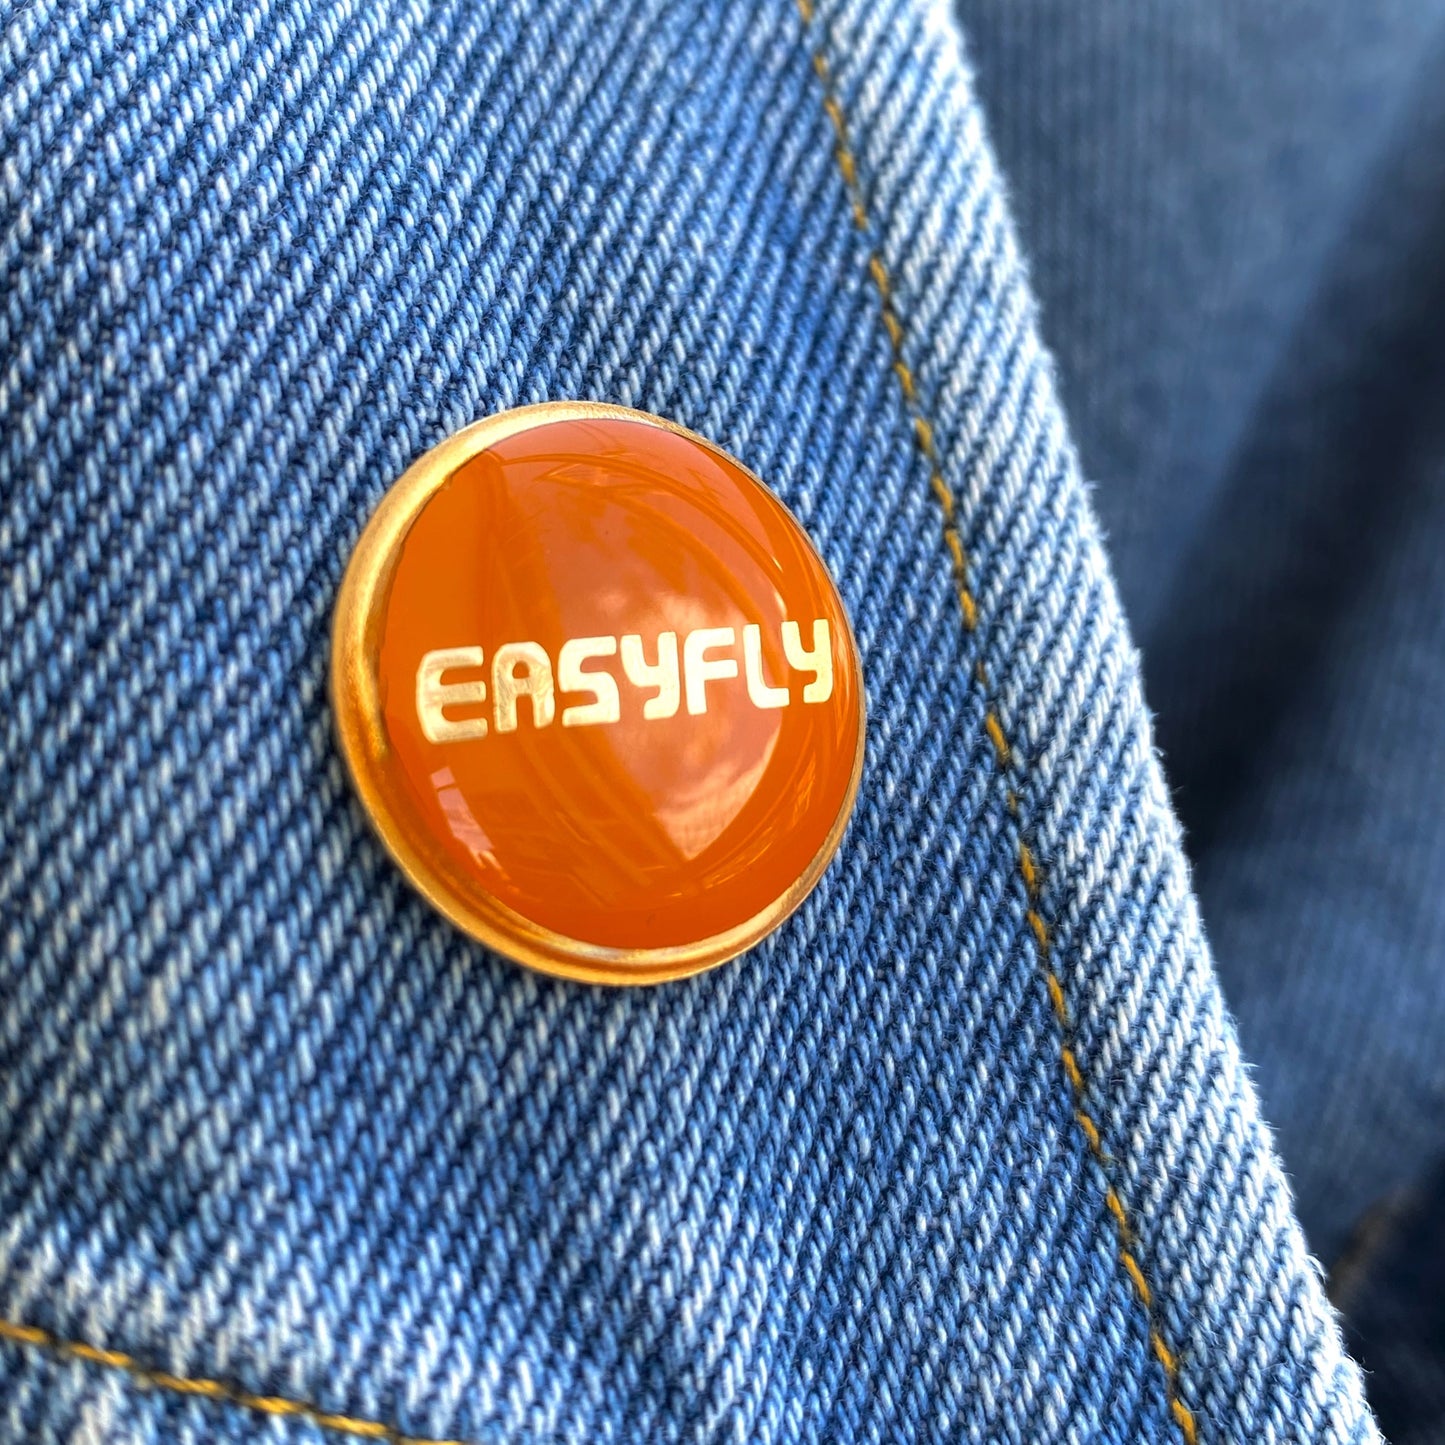 Pin circular Easyfly naranja